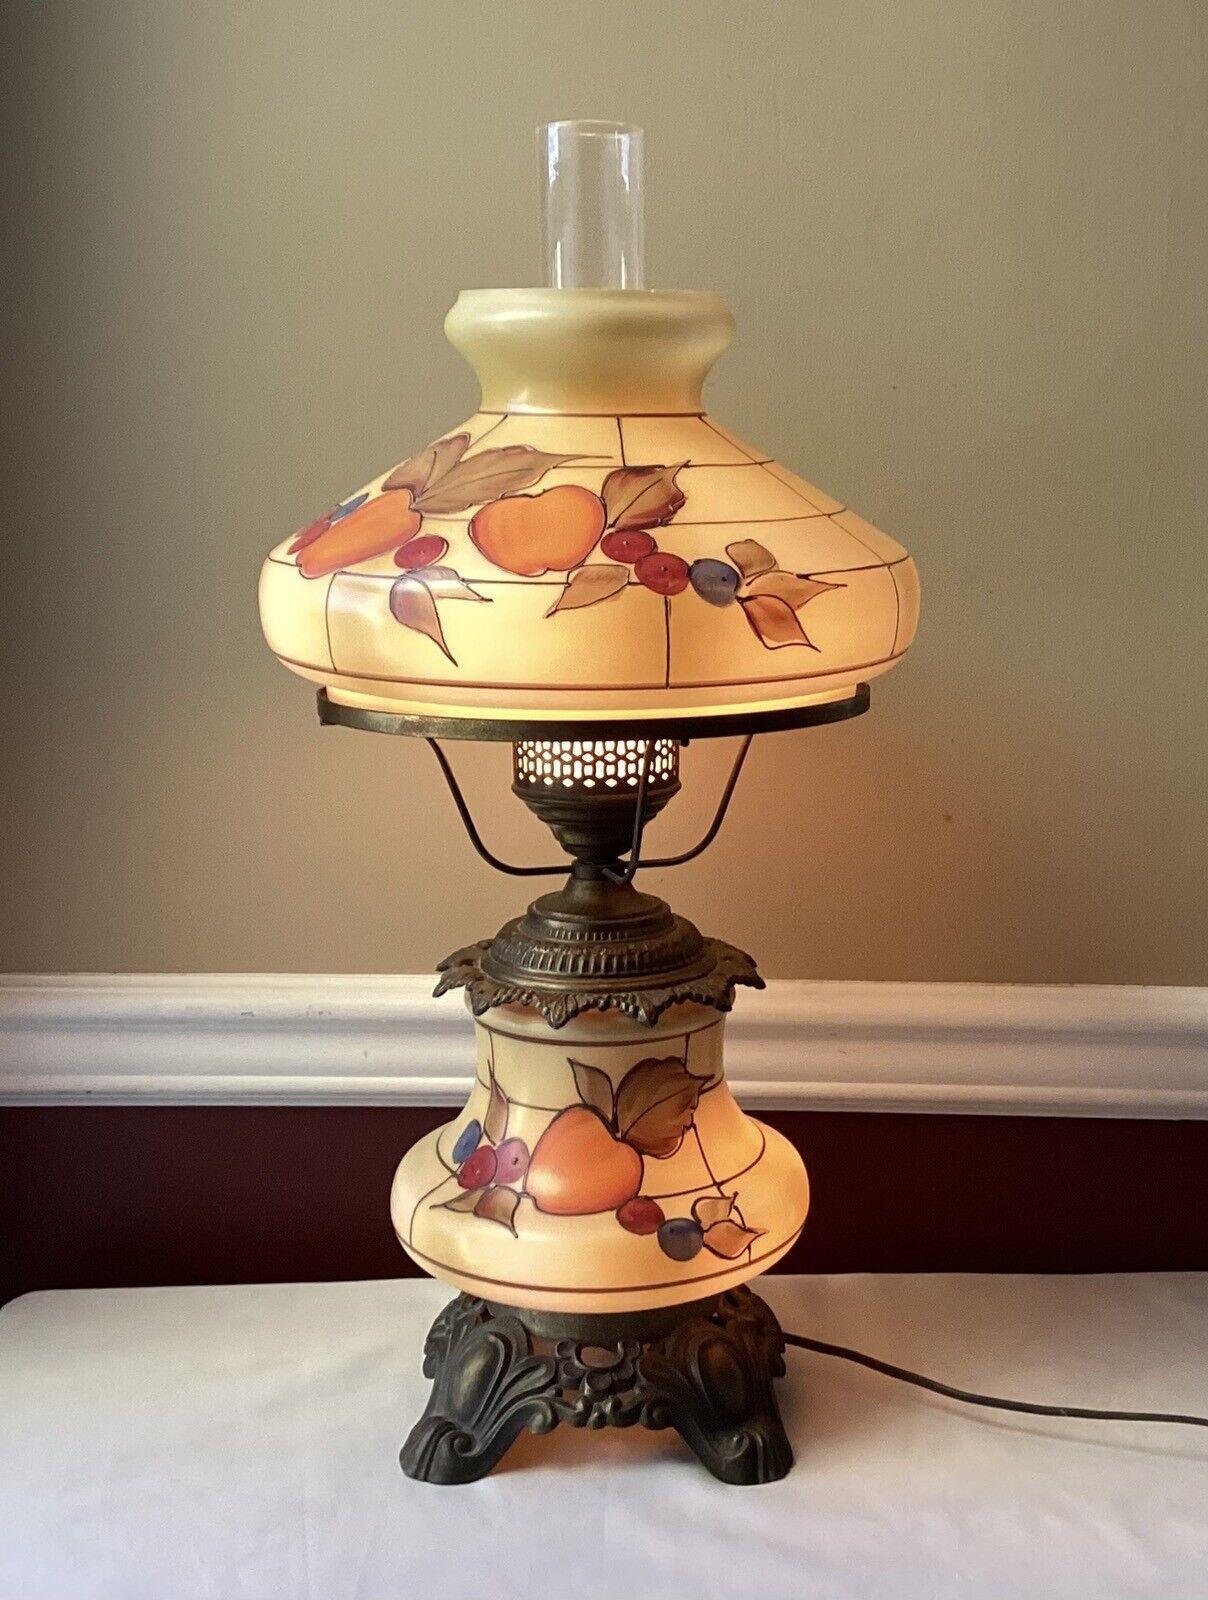 VTG Gone With The Wind/ Parlor/ Hurricane Lamp, Fruit-design, 3-Light Settings